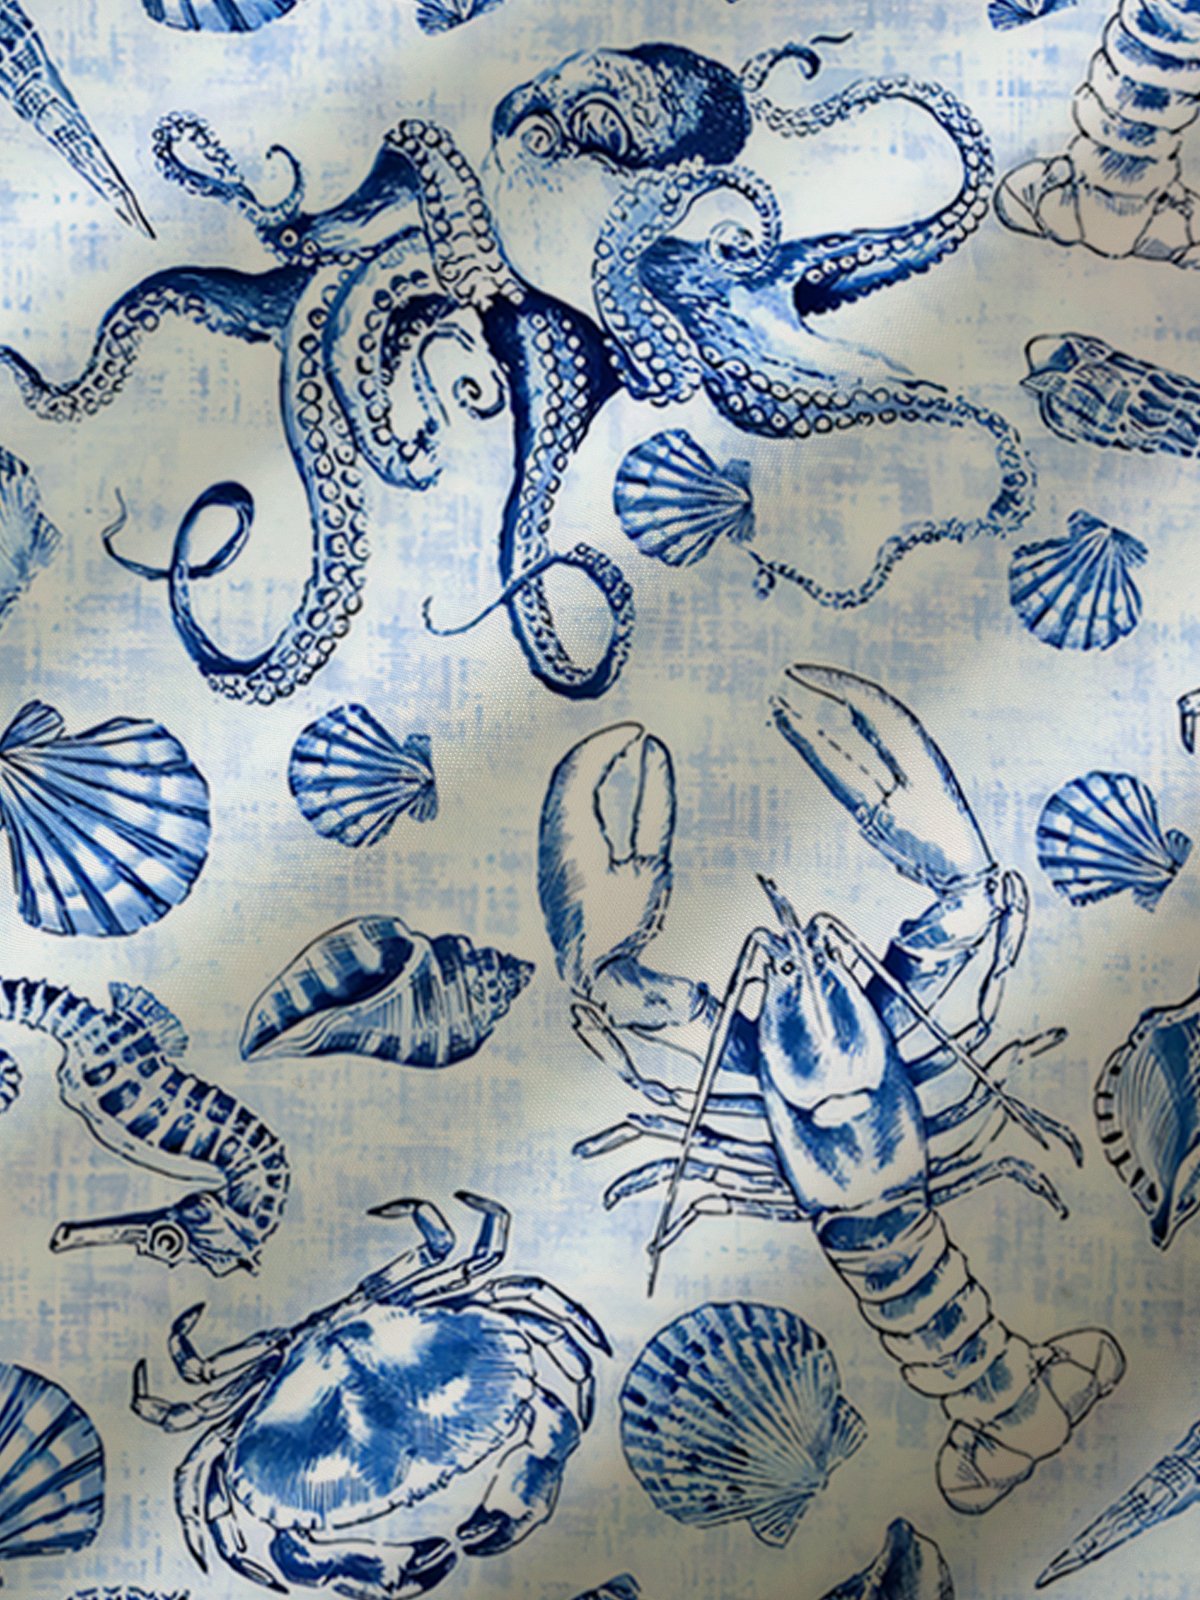 Royaura®Hawaii Lobster Marine Life Print Men's Button Pocket Short Sleeve Shirt